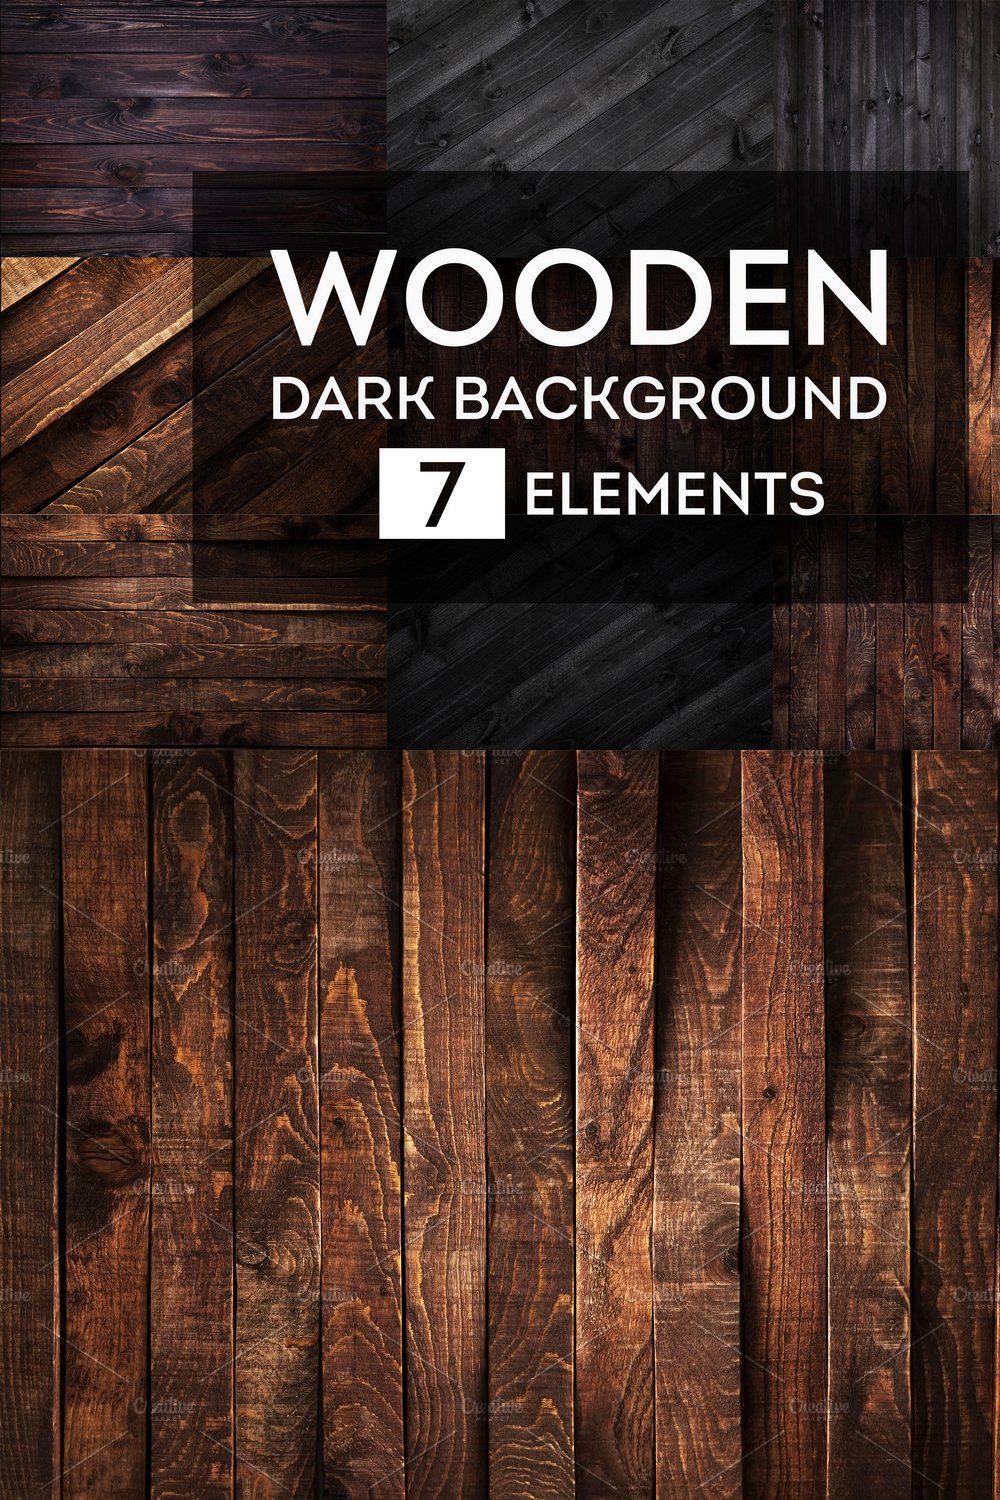 Dark wooden backgrounds bundle #1 pinterest preview image.